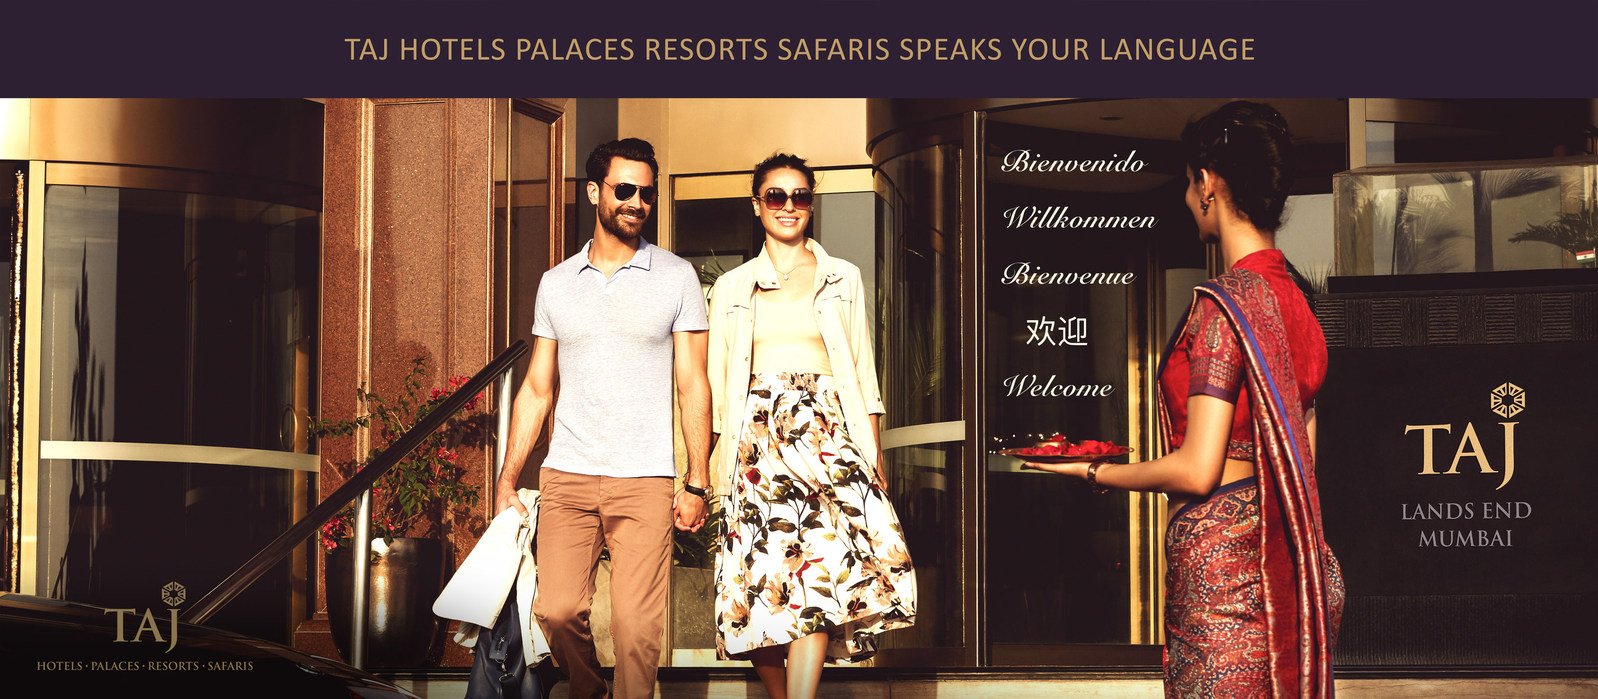 Taj Hotels Palaces Resorts Safaris launches multilingual website